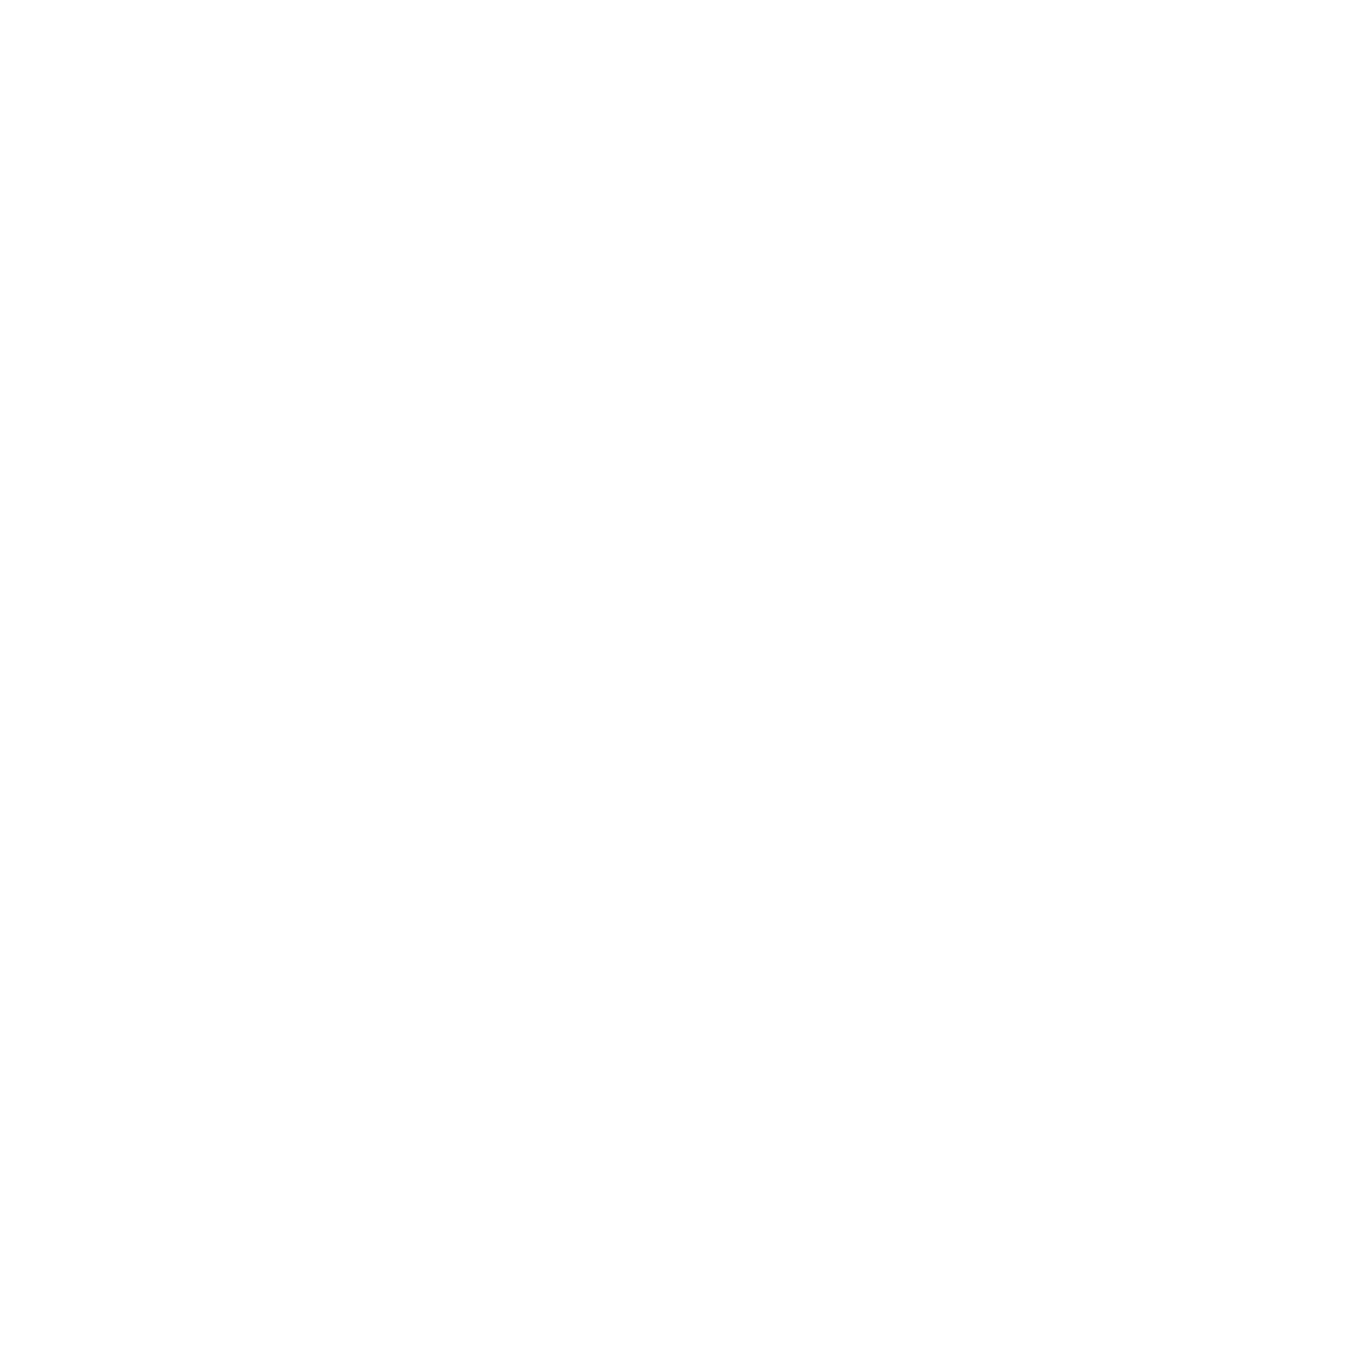 ss precision